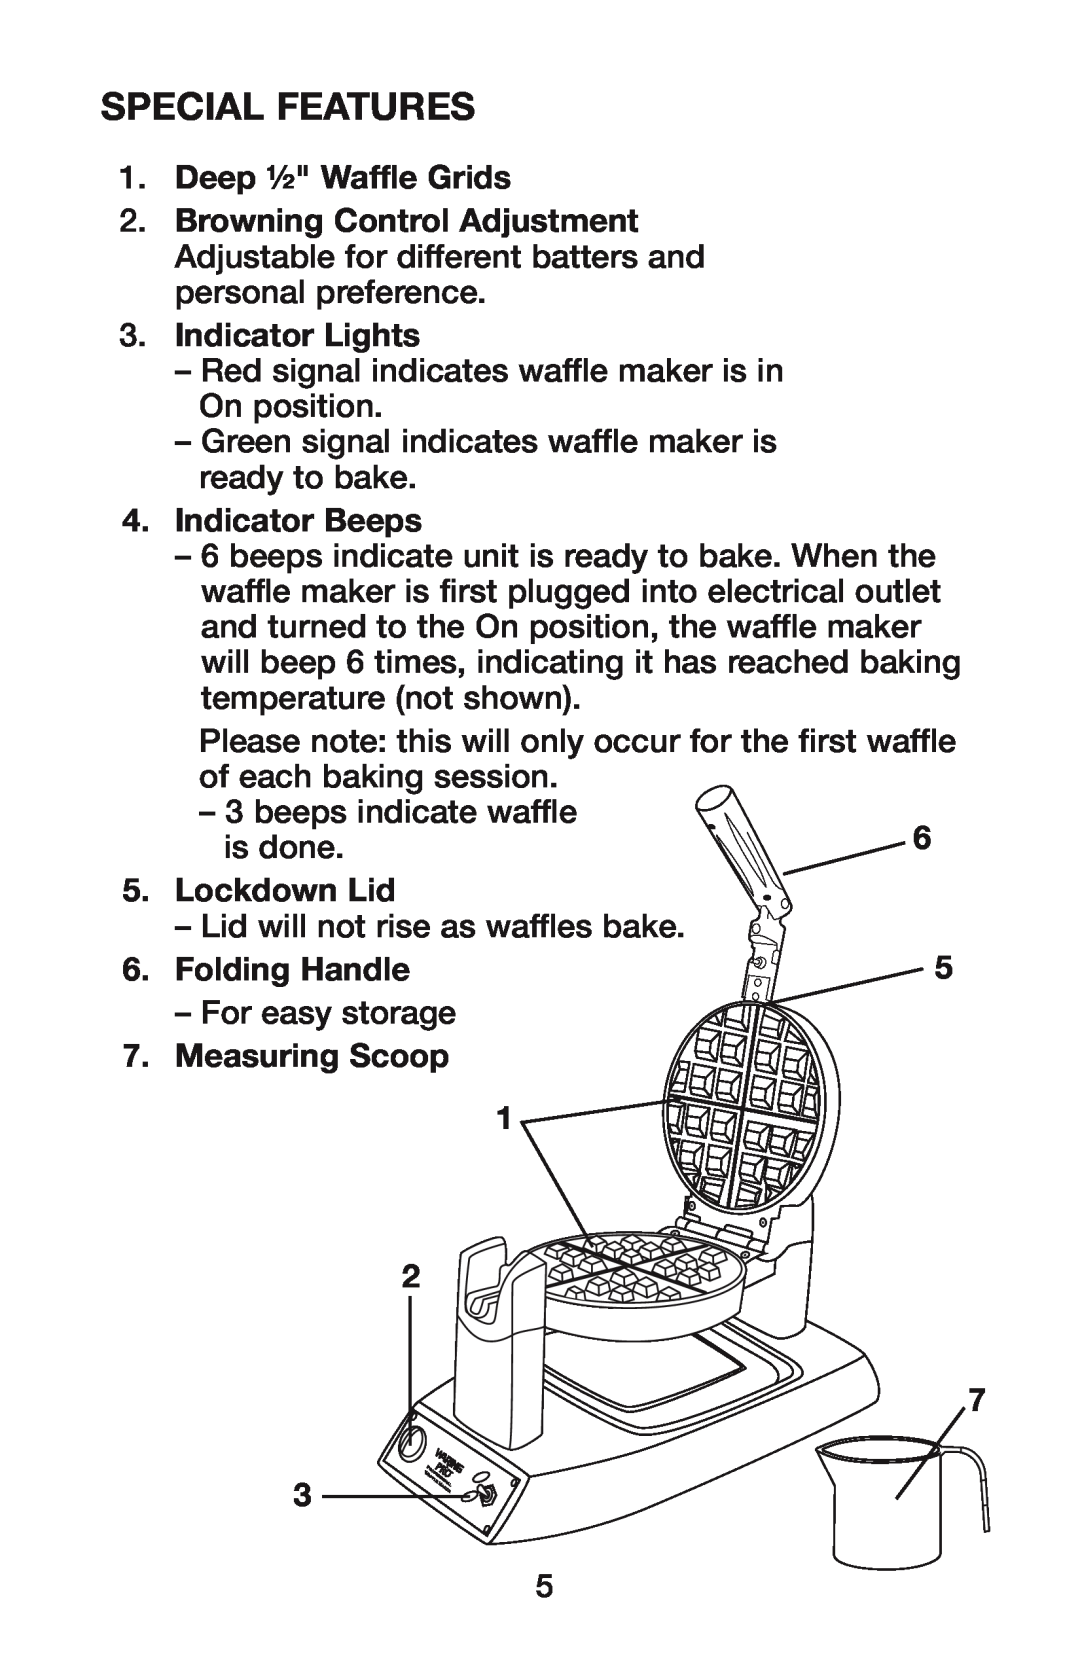 Waring IB8465 manual Special Features, Deep ½ Waffle Grids, Indicator Lights, Indicator Beeps, Lockdown Lid, Folding Handle 